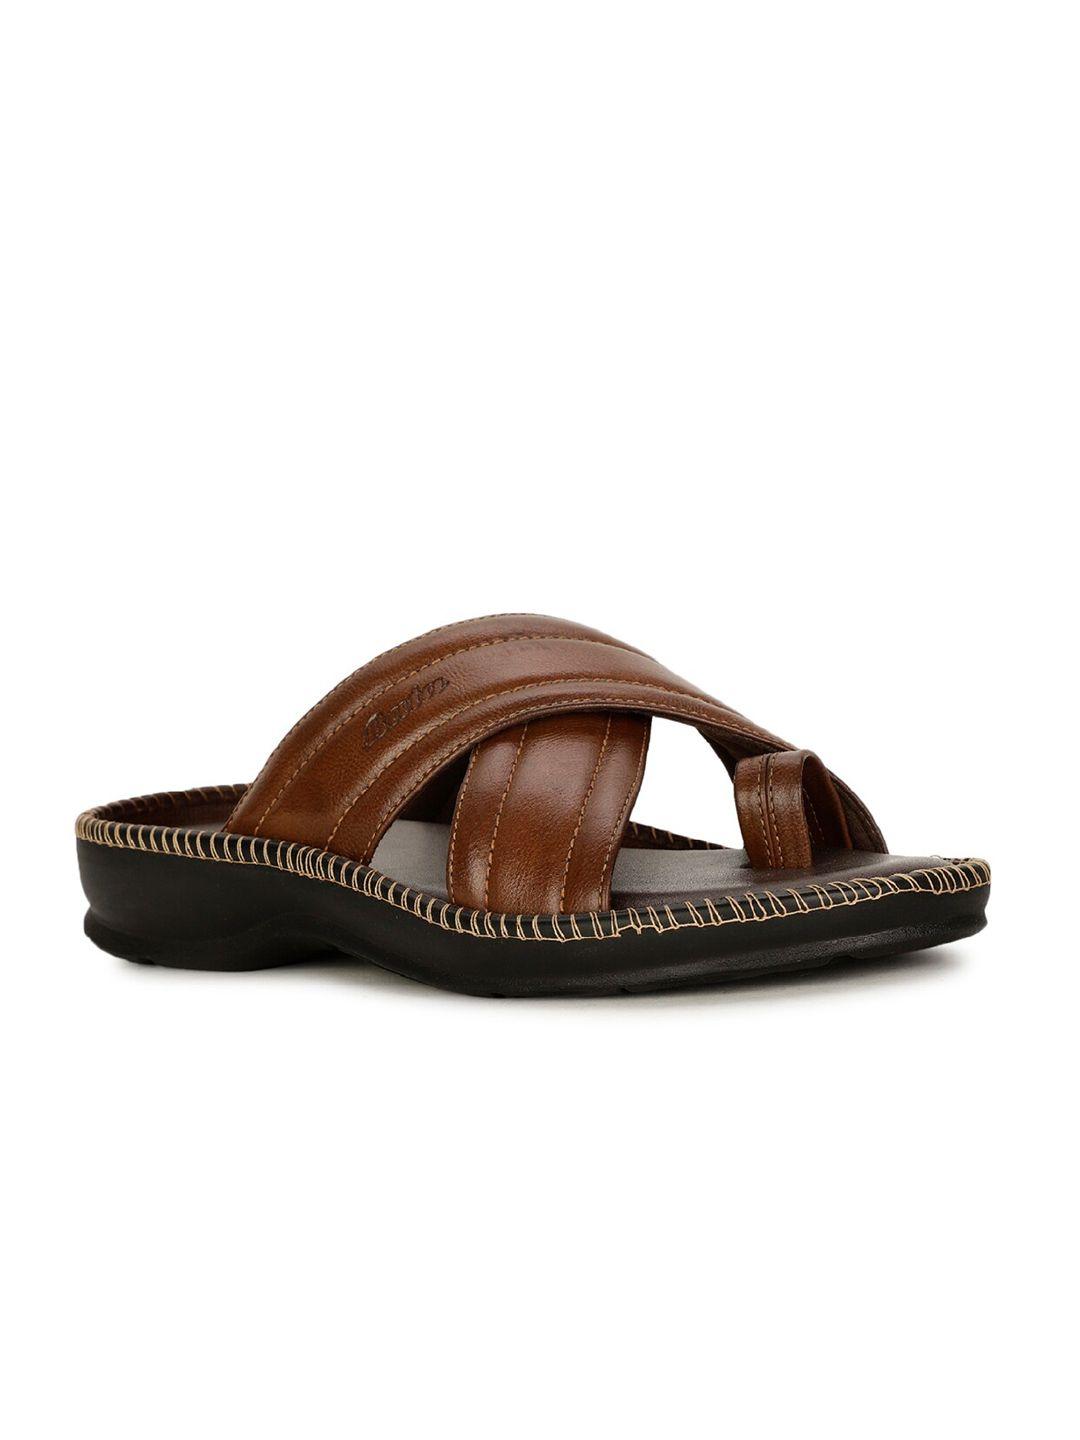 Bata Men Textured One Toe Comfort Sandals